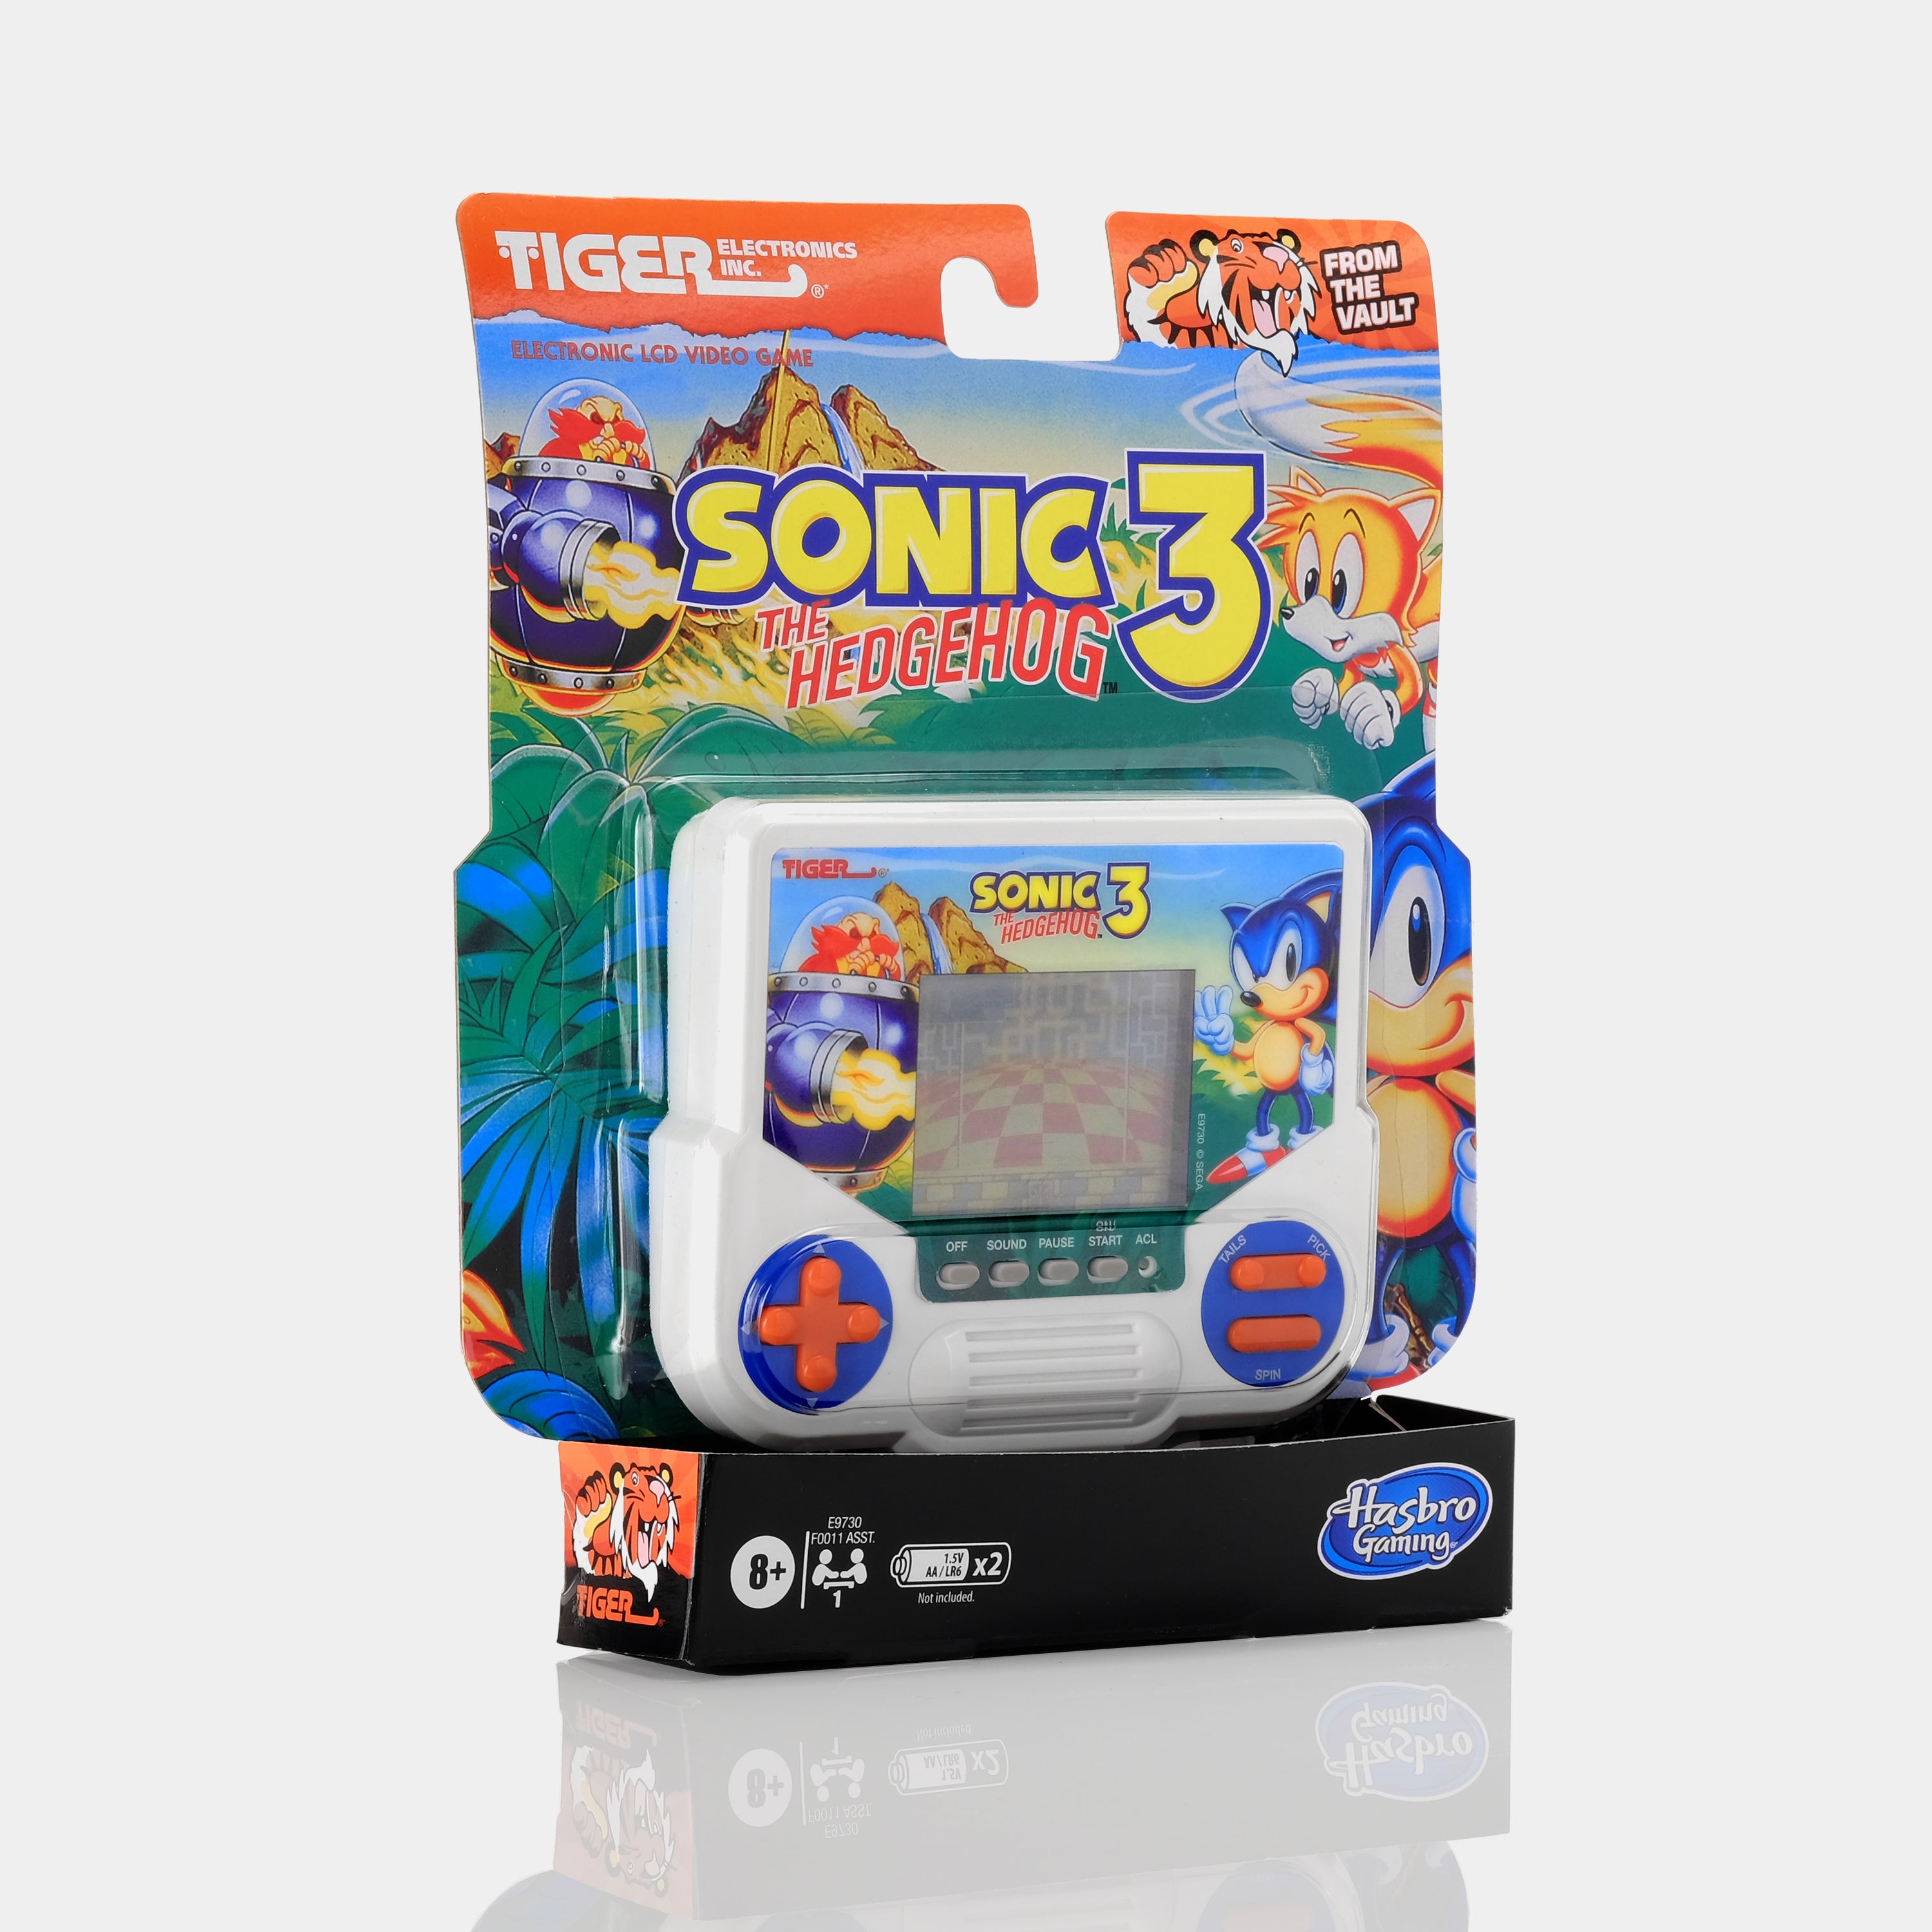 Sonic The Hedgehog 3 Handheld Video Game